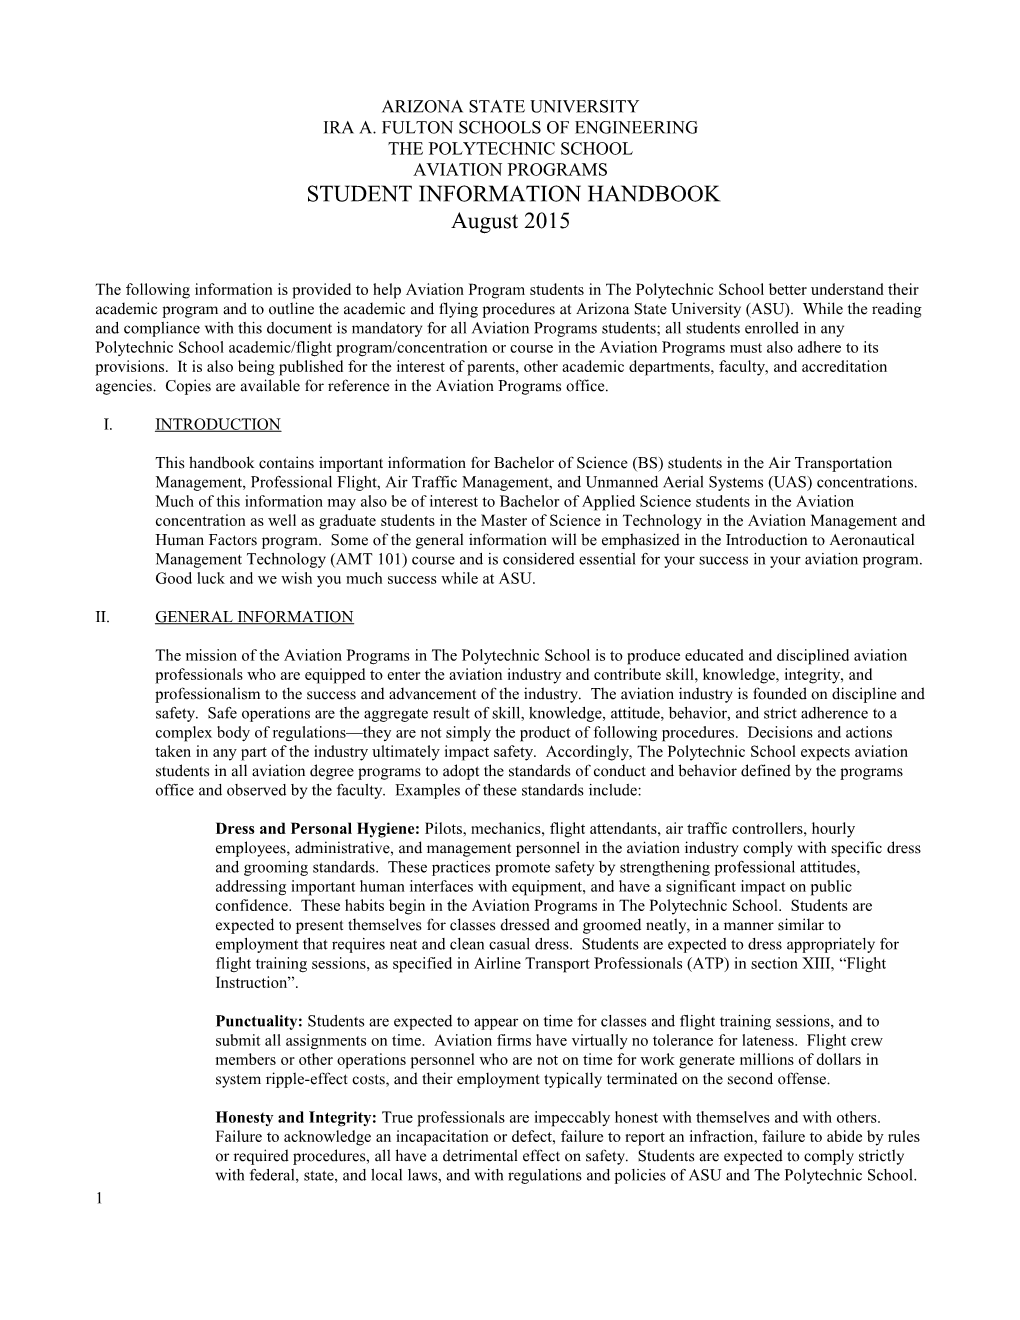 Aerospace Technology Student Information Handbook: 1995-96